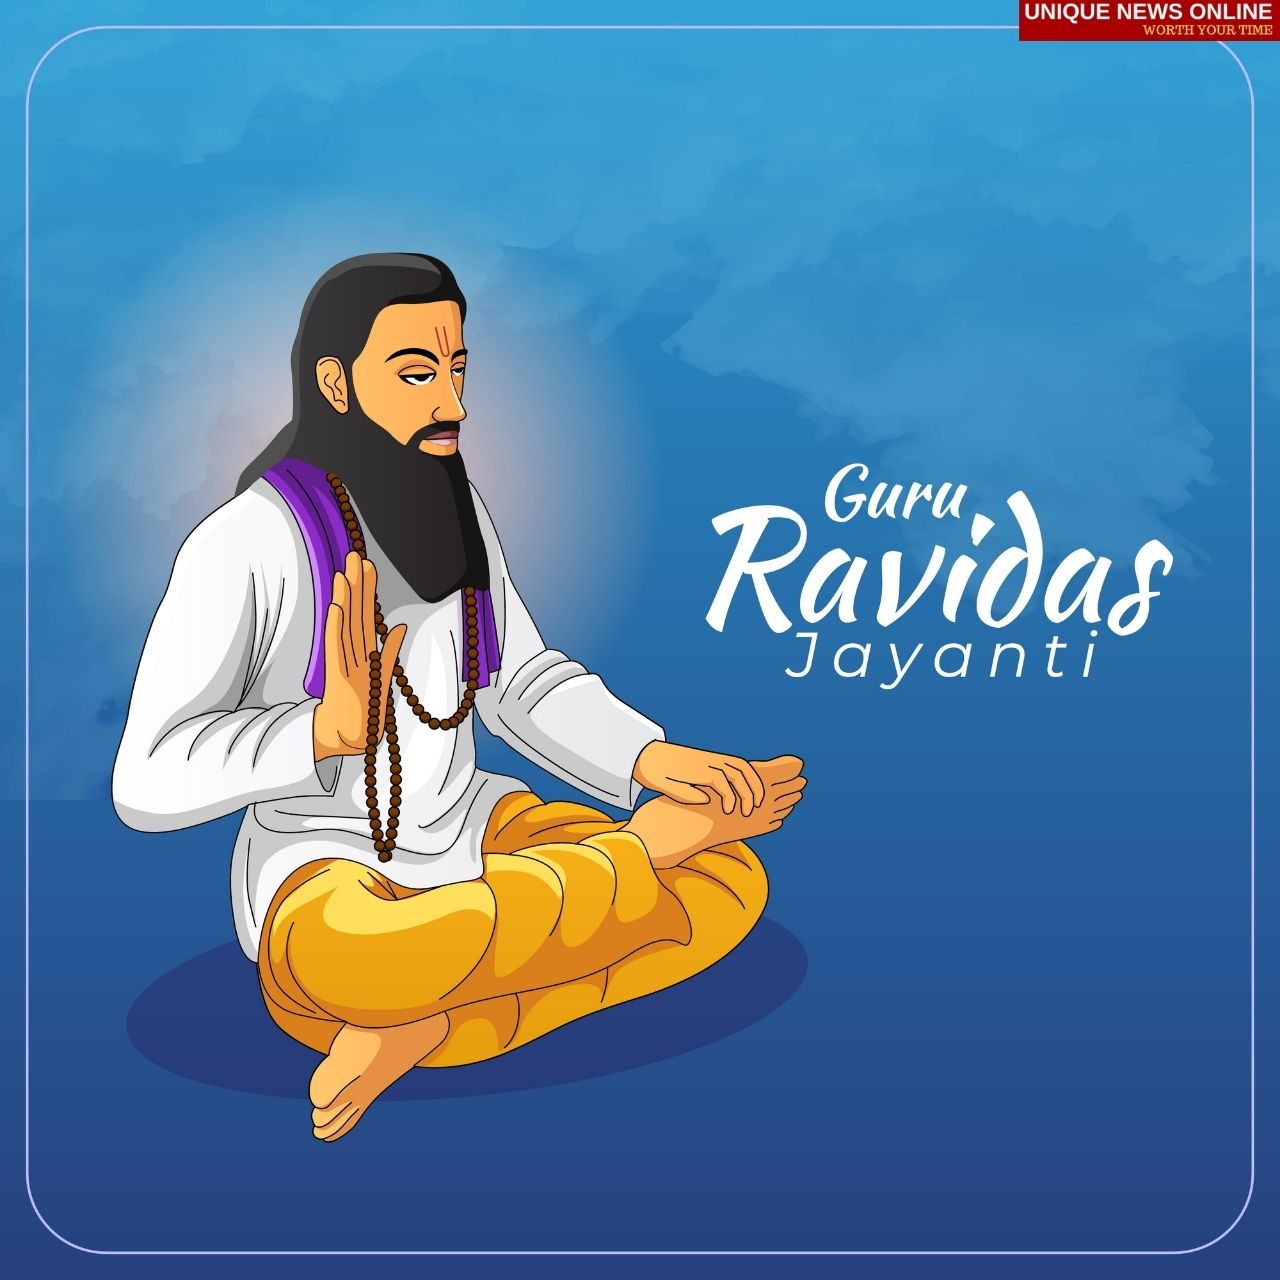 Guru Ravidas Jayanti 2022 التاريخ والتاريخ والأهمية والأهمية والاحتفال والمزيد